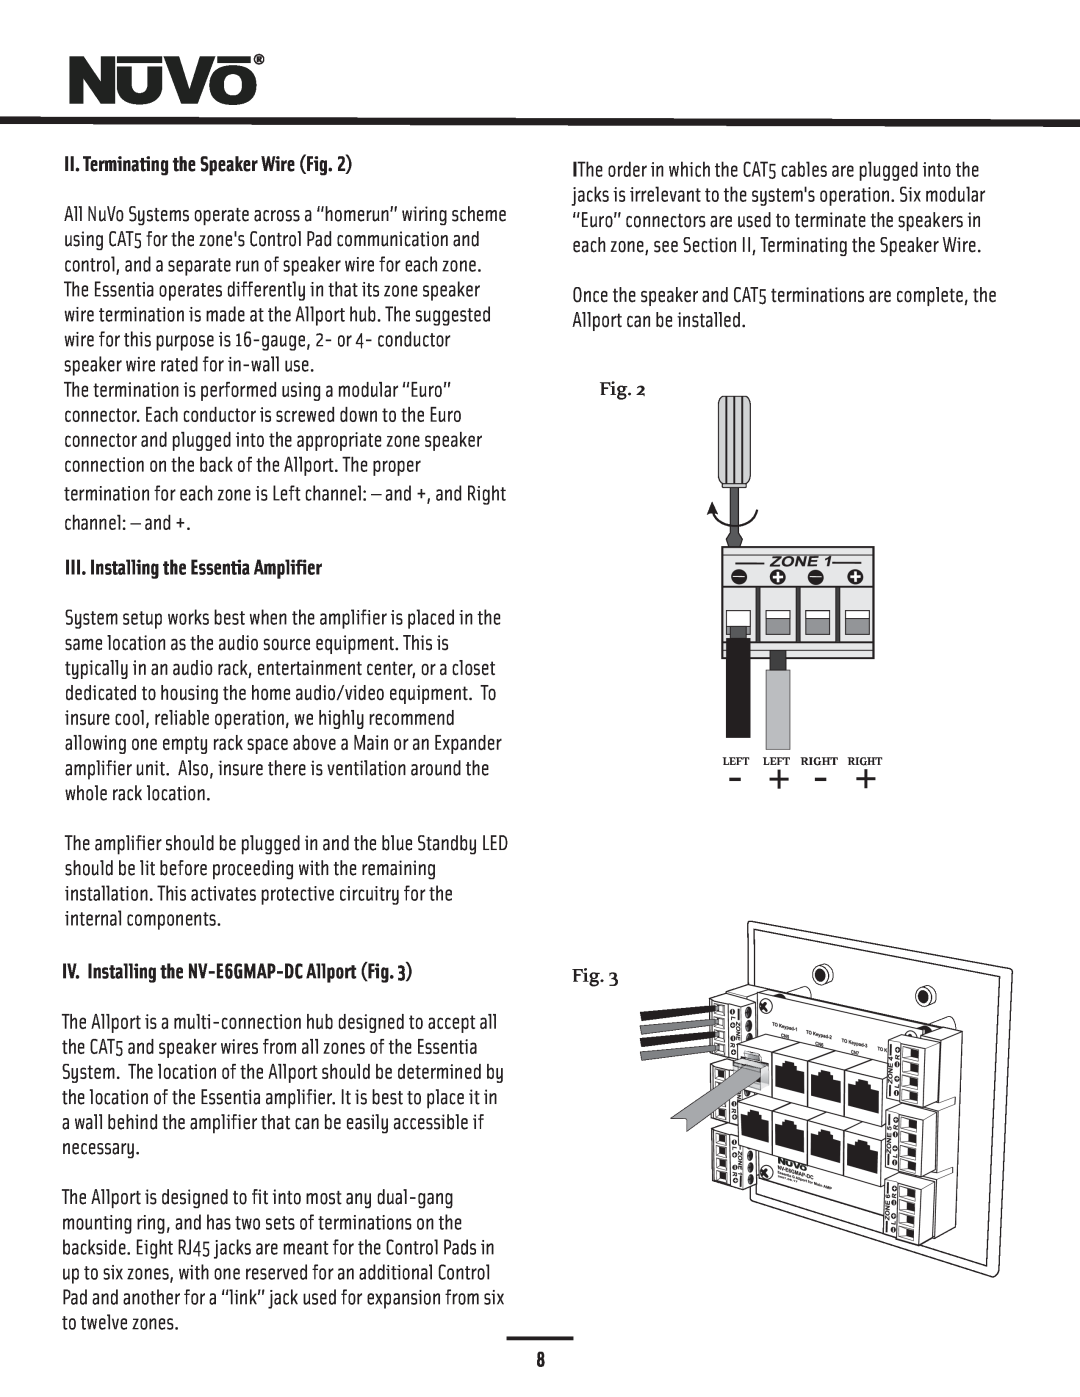 Nuvo NV-E6GXS, NV-E6GMS manual II. Terminating the Speaker Wire Fig, III. Installing the Essentia Amplifier, + - + 